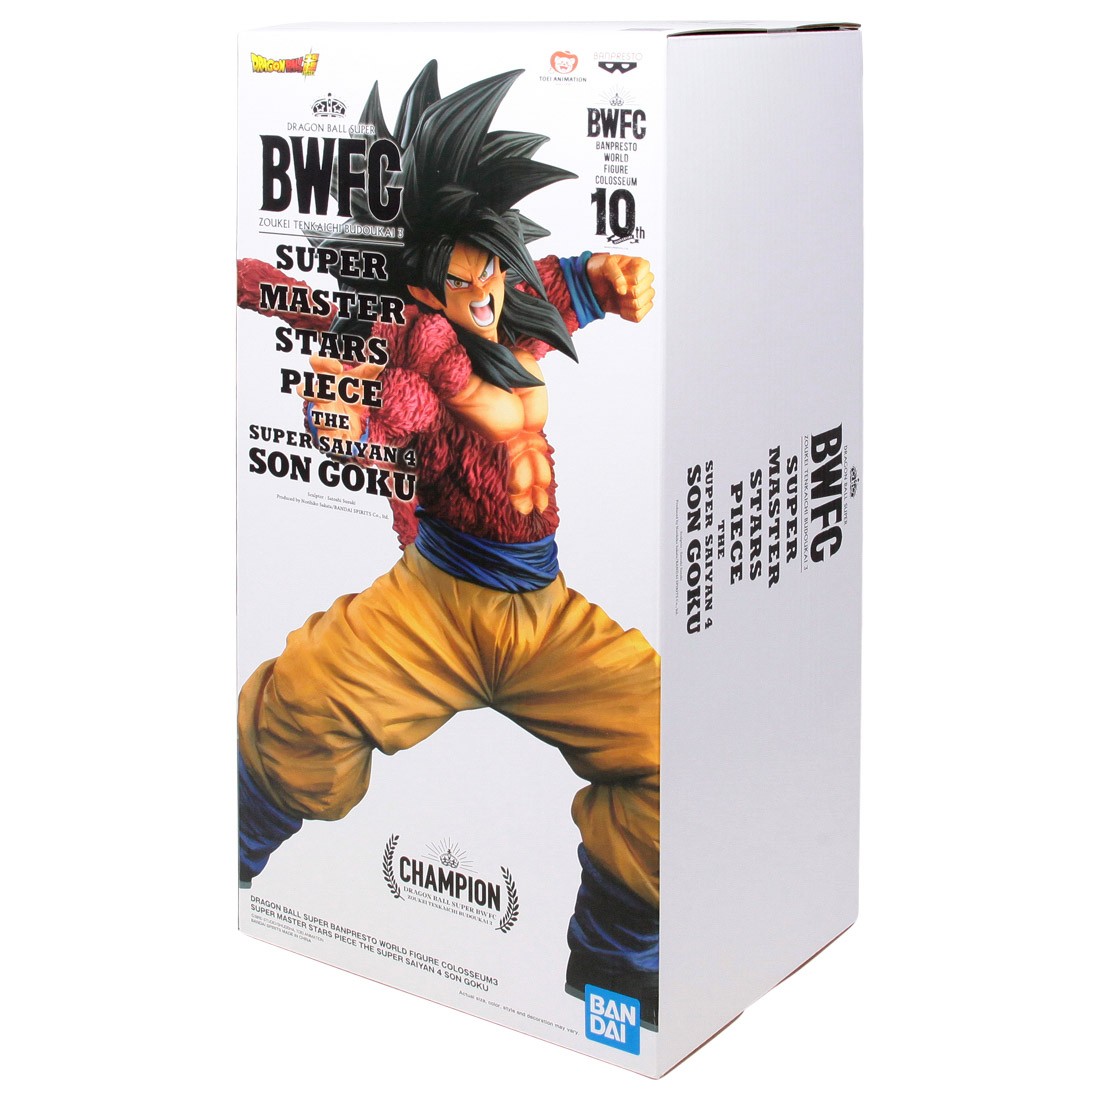 Action Figure Dragon Ball Goku Ssj4 Sdbh Original Banpresto